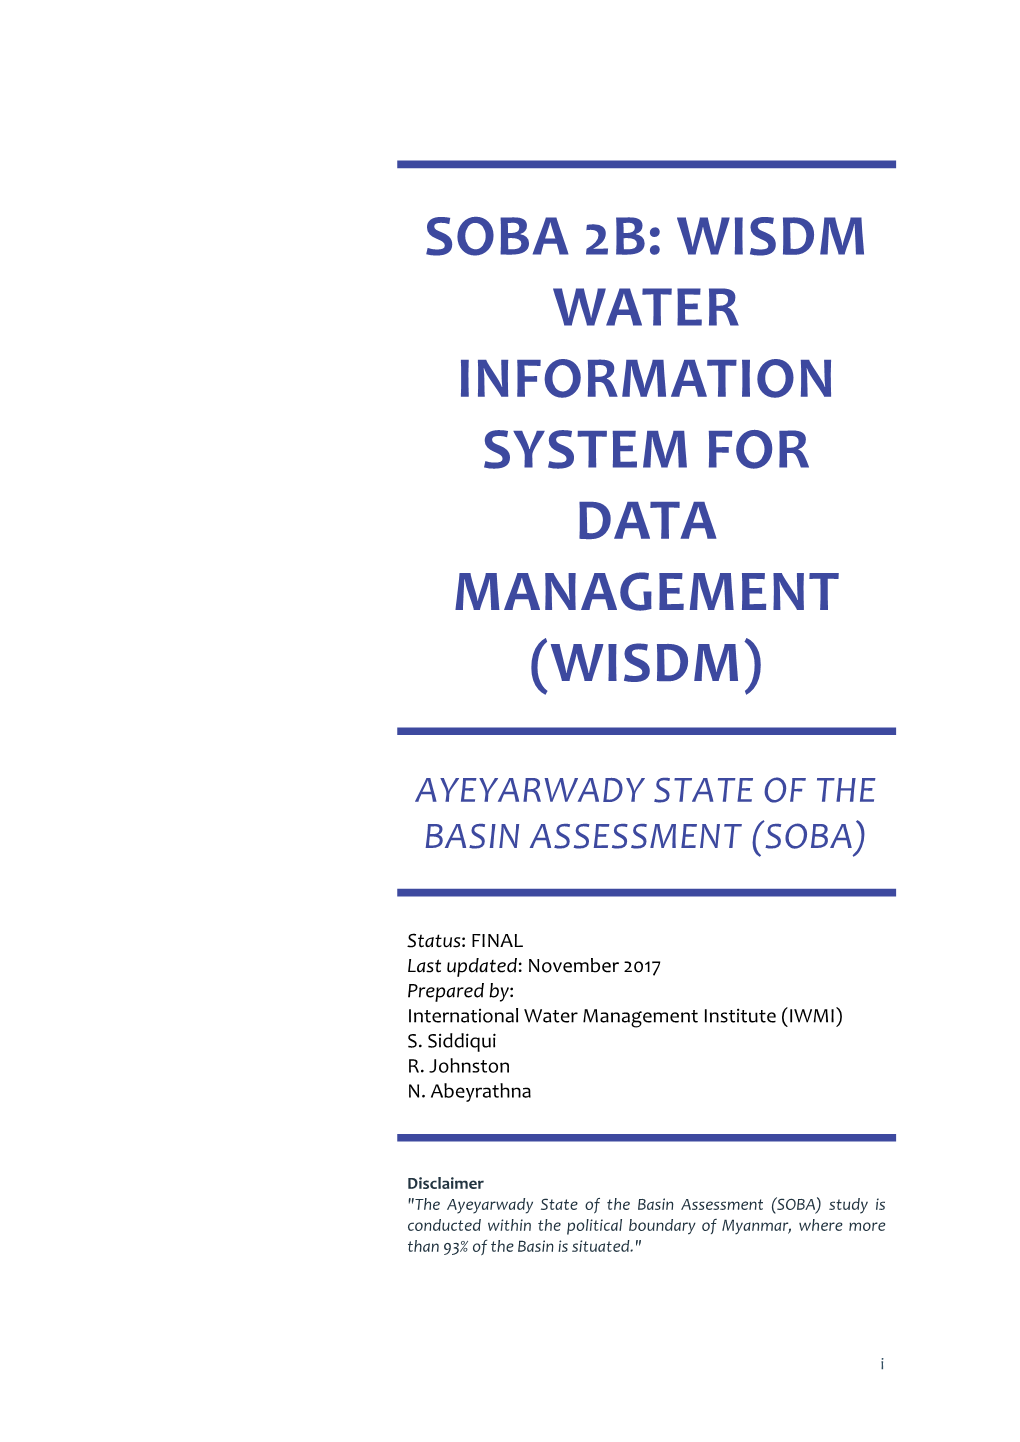 Wisdm Water Information System for Data Management (Wisdm)